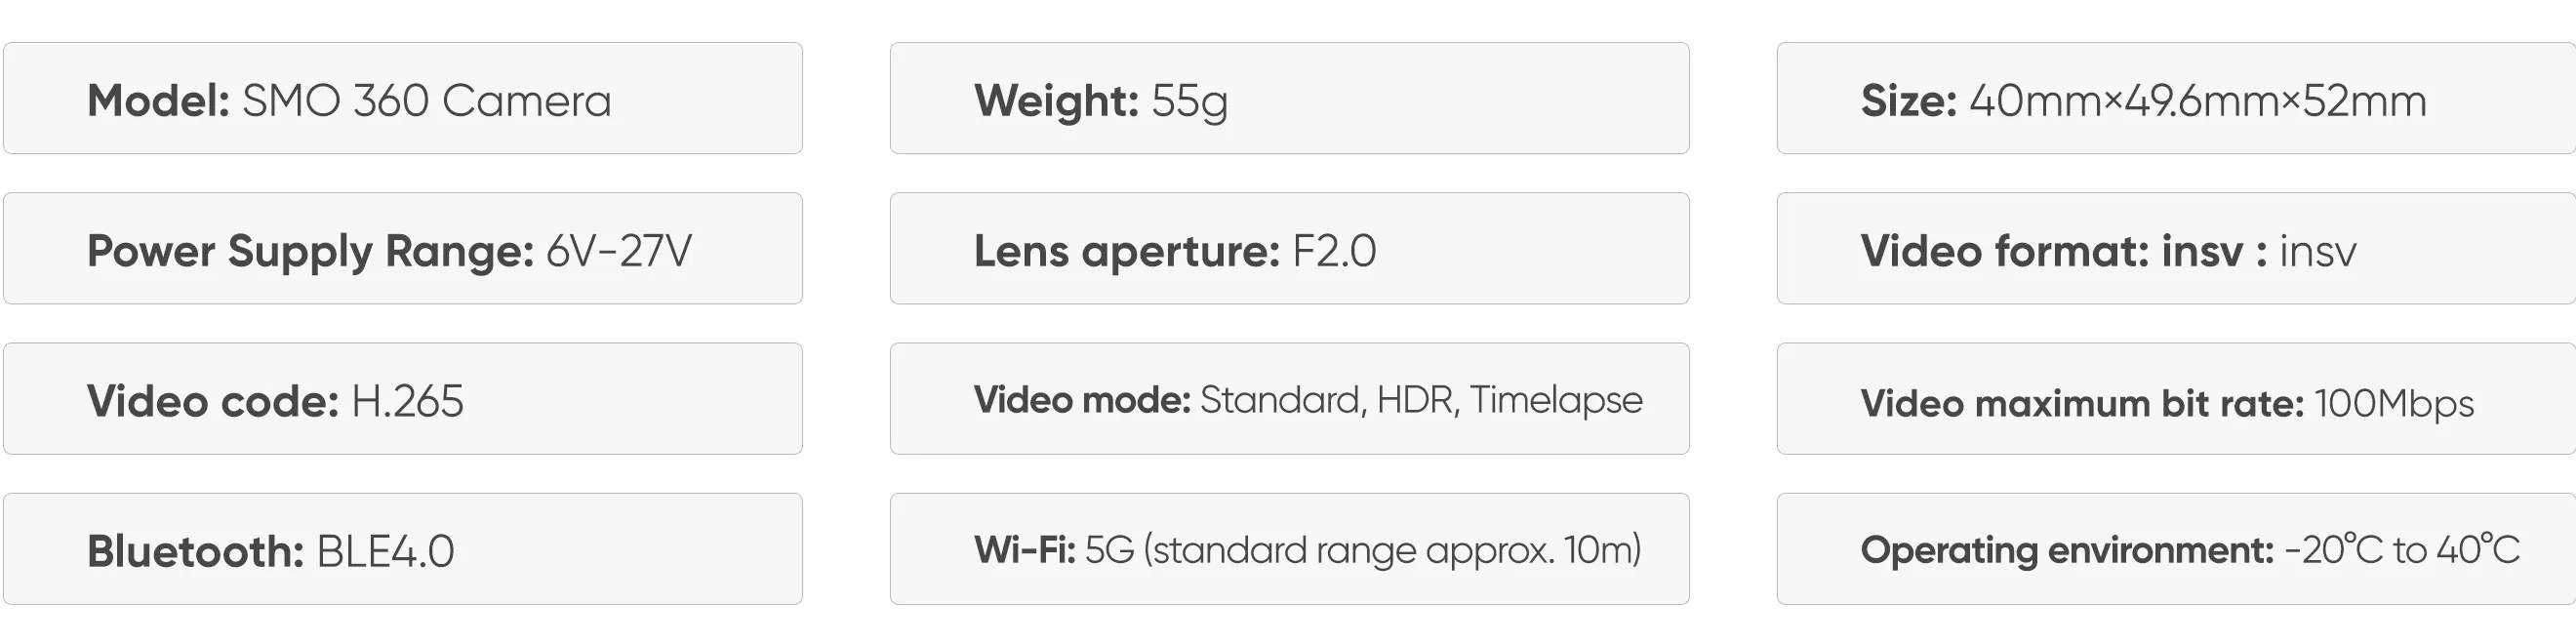 BetaFPV SMO 360 camera specifications